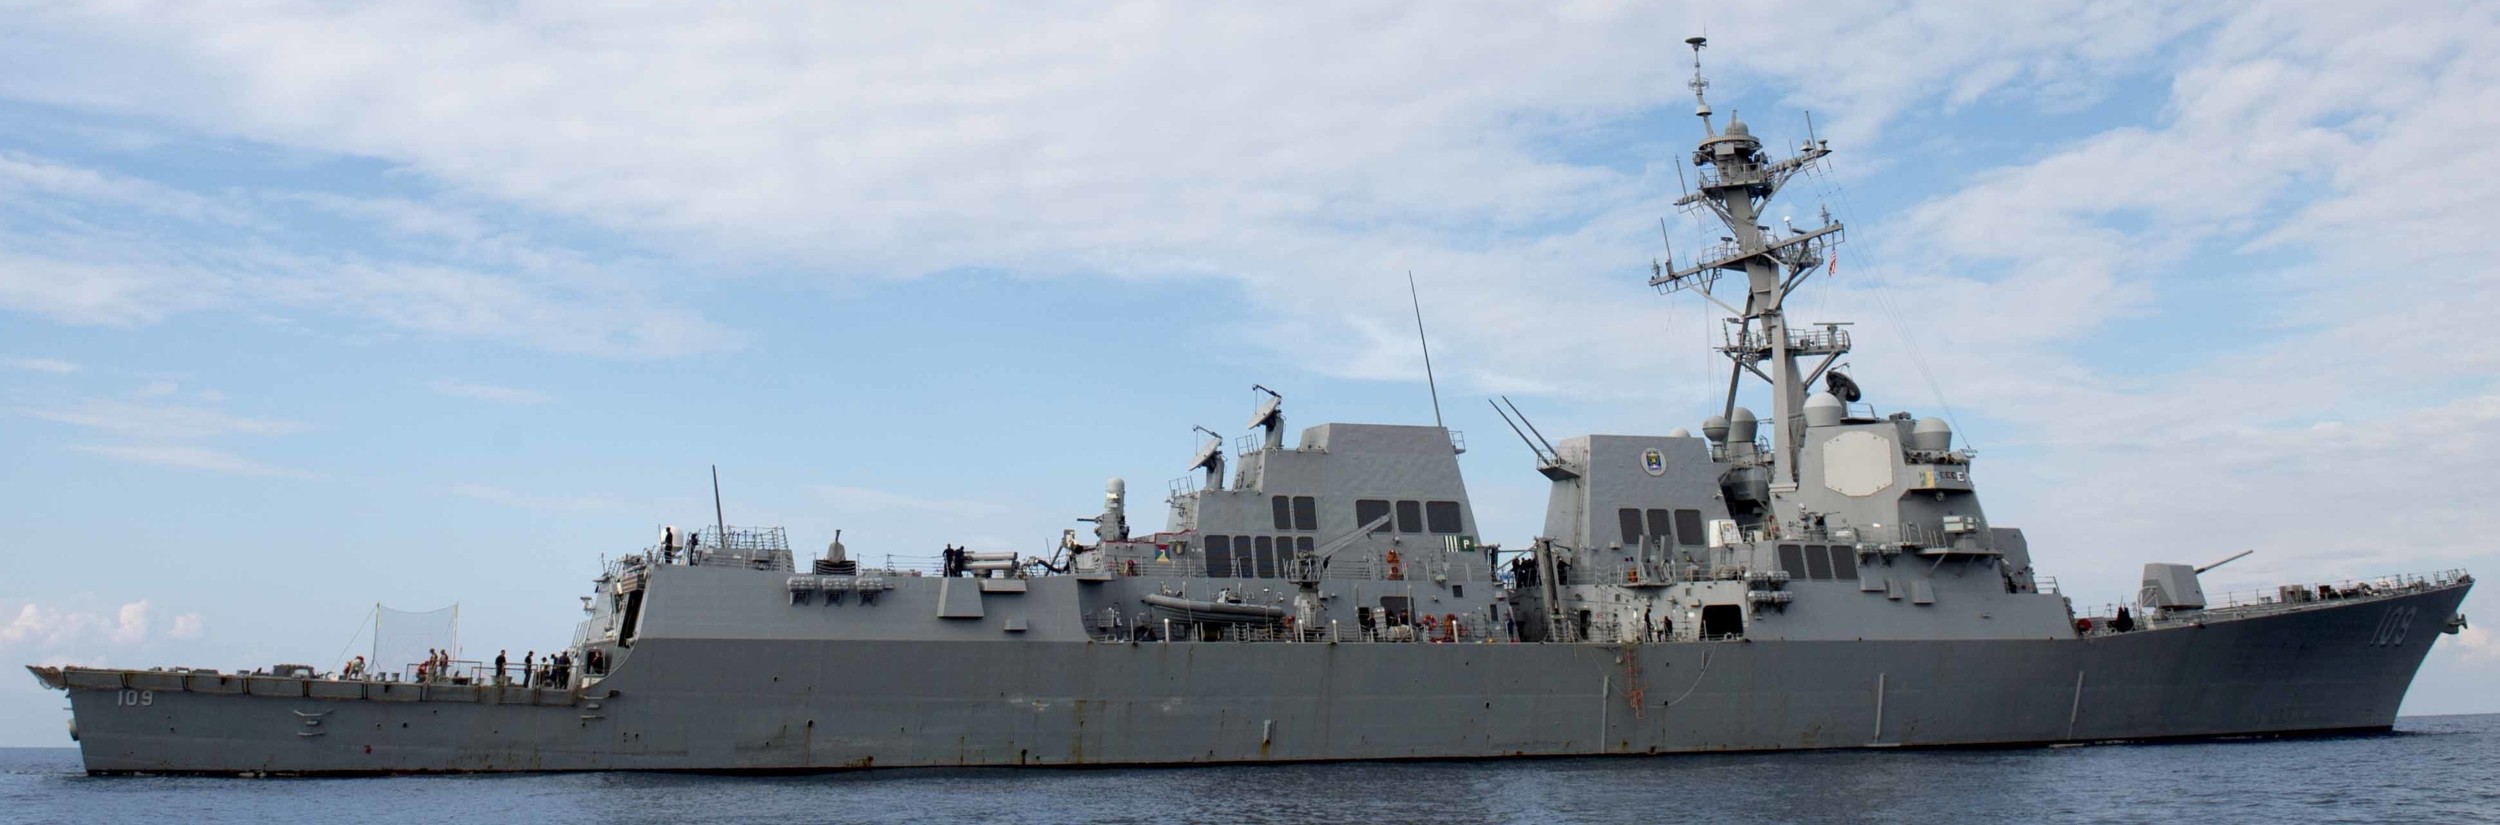 ddg-109 uss jason dunham arleigh burke class guided missile destroyer aegis us navy gulf of mexico 30